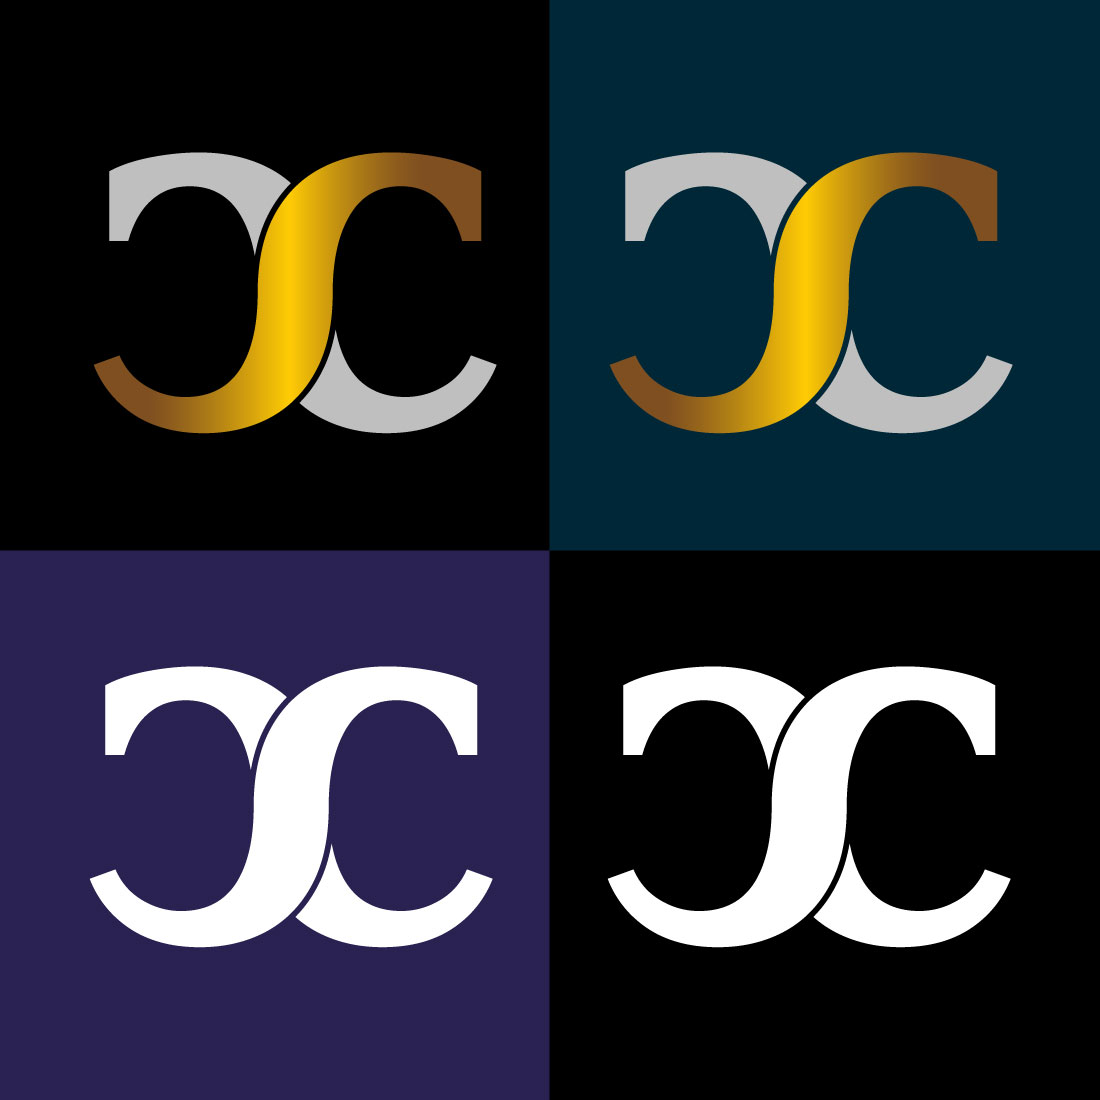 CC Letter Logo logo preview.